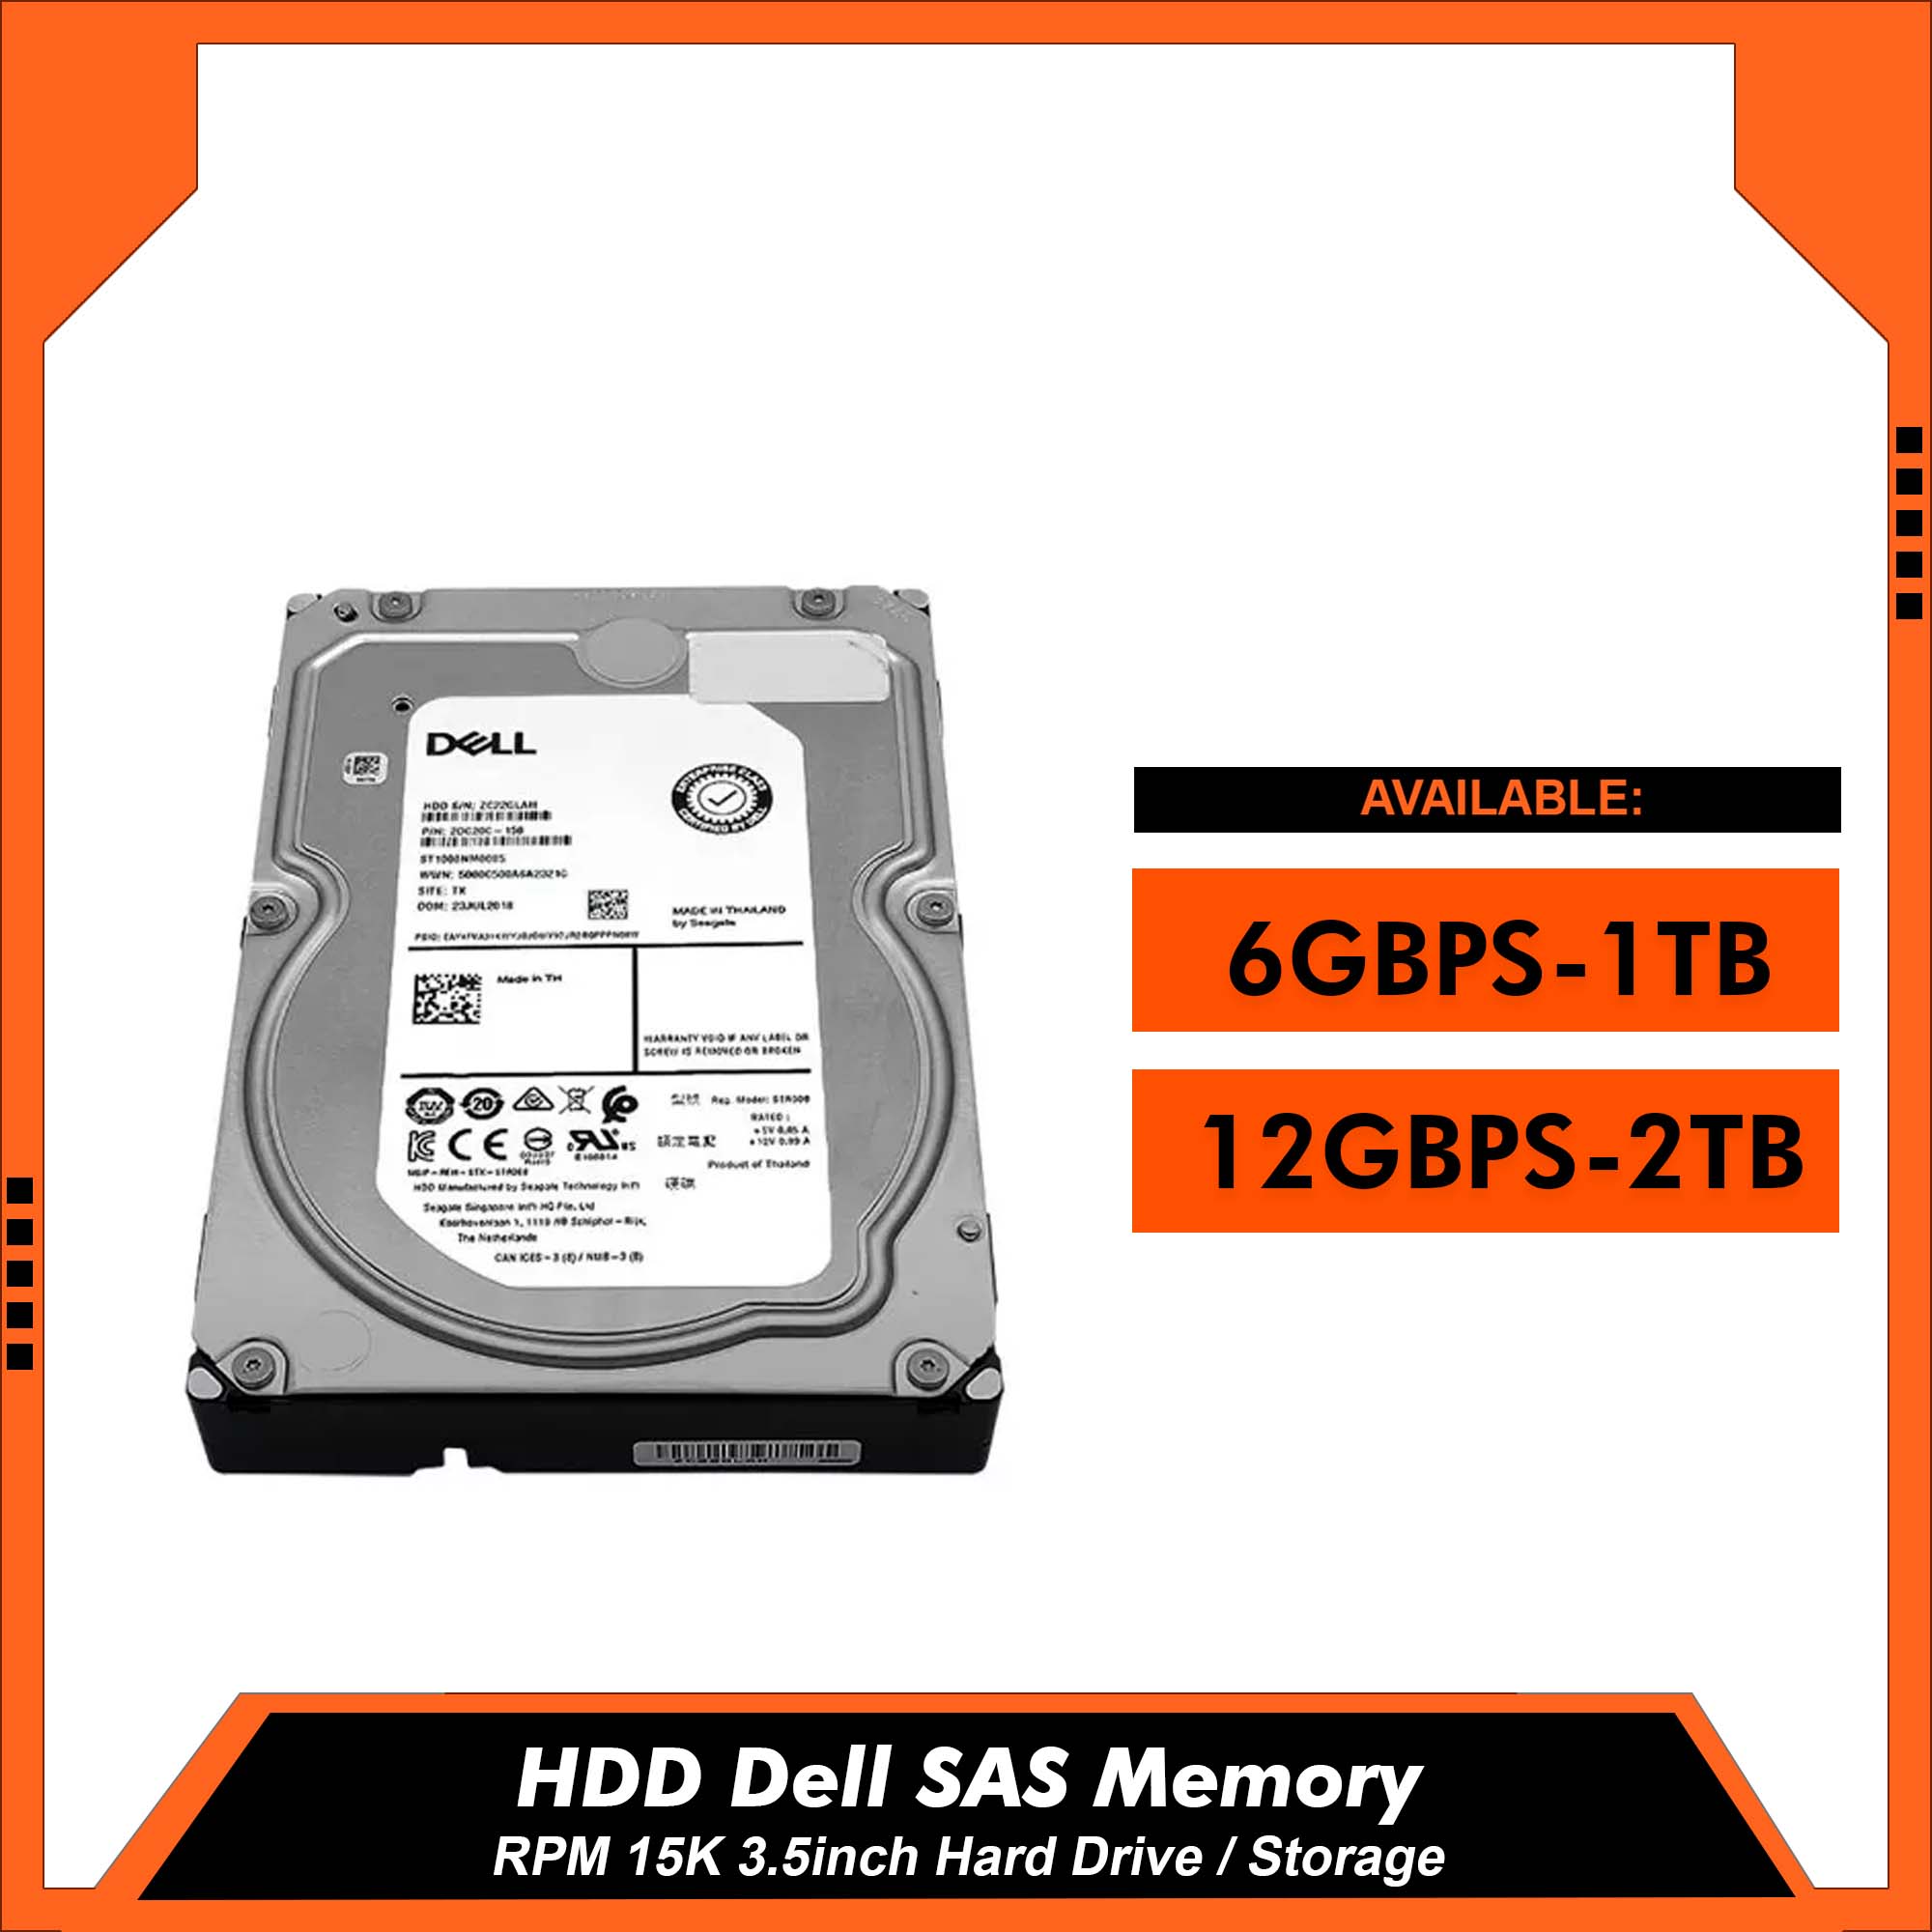 HDD Dell SAS 6GBPS-1TB / 12GBPS-2TB Memory RPM 15K  Hard Drive /  Storage│For Server:  T40│T150│T140│T340│T440│T640│R240│R250│R350│R440│R540│R640│R740│Dell RAM |  Lazada PH